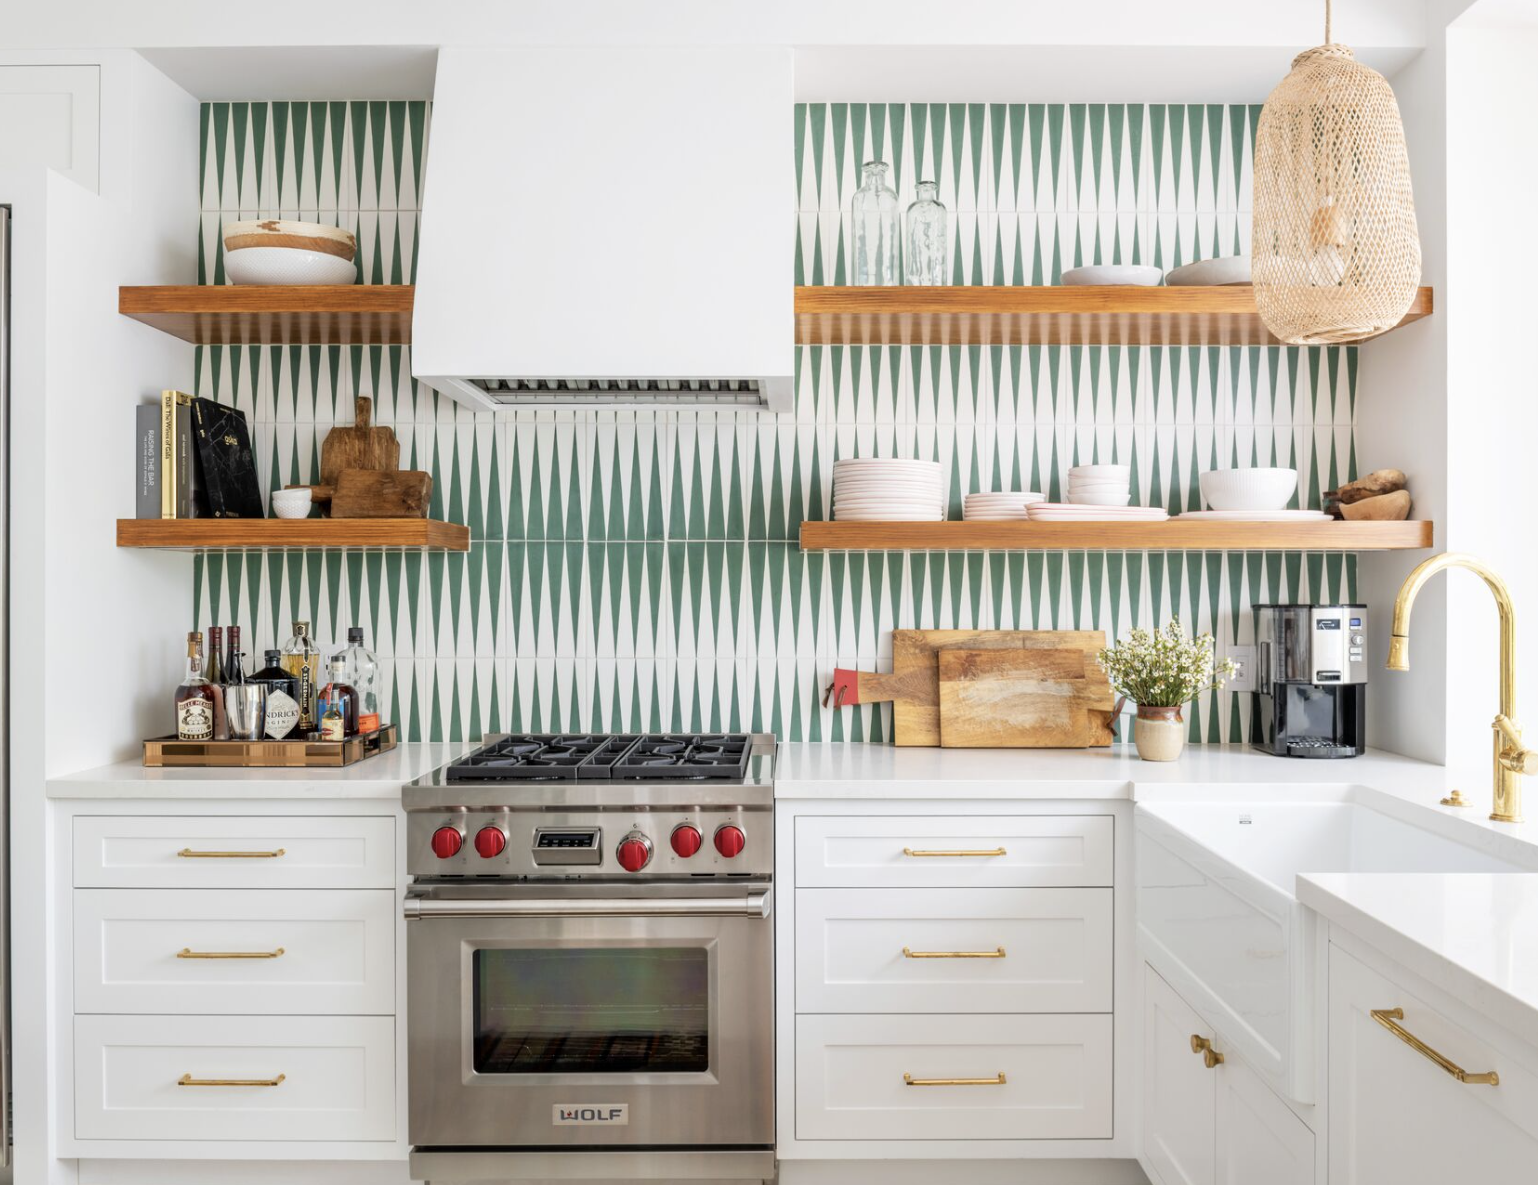 30 best kitchen backsplash ideas for every budget